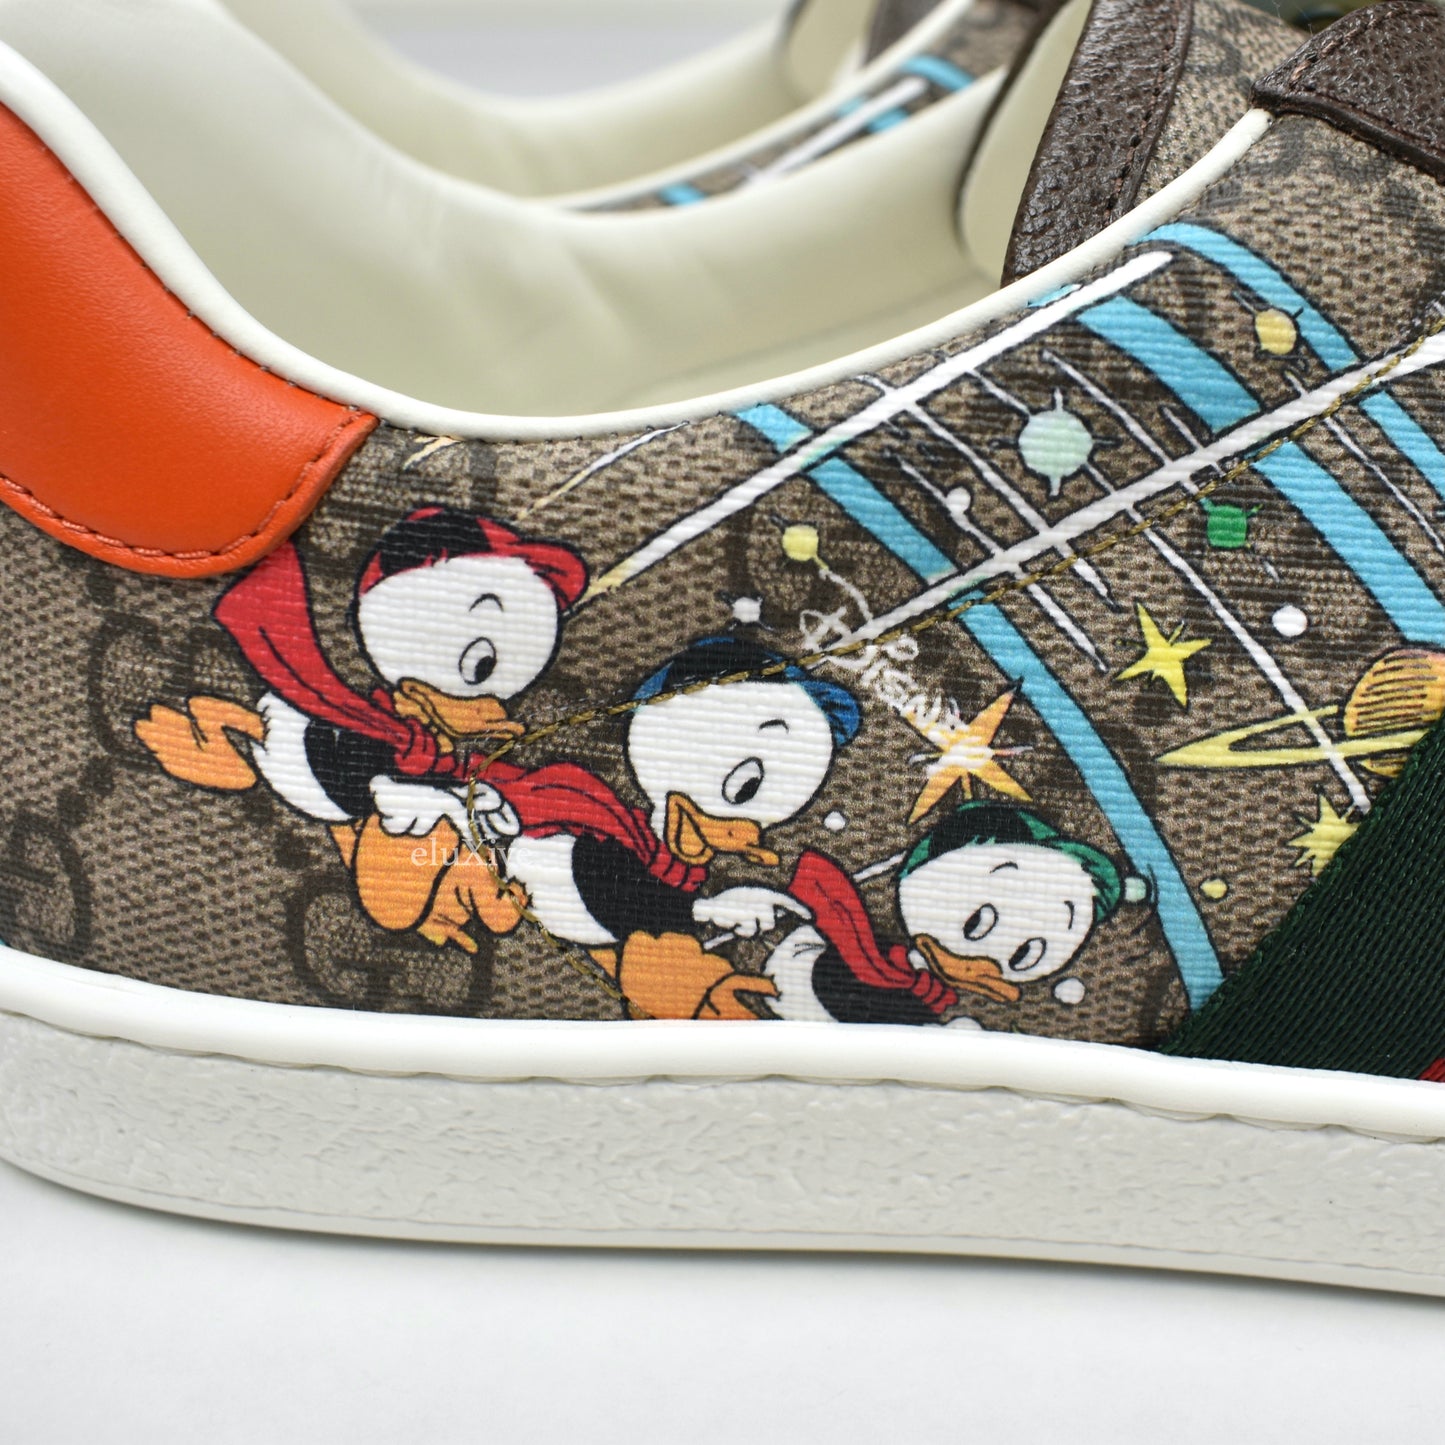 Gucci x Disney - GG Supreme Monogram Donald Duck 'Ace' Sneakers